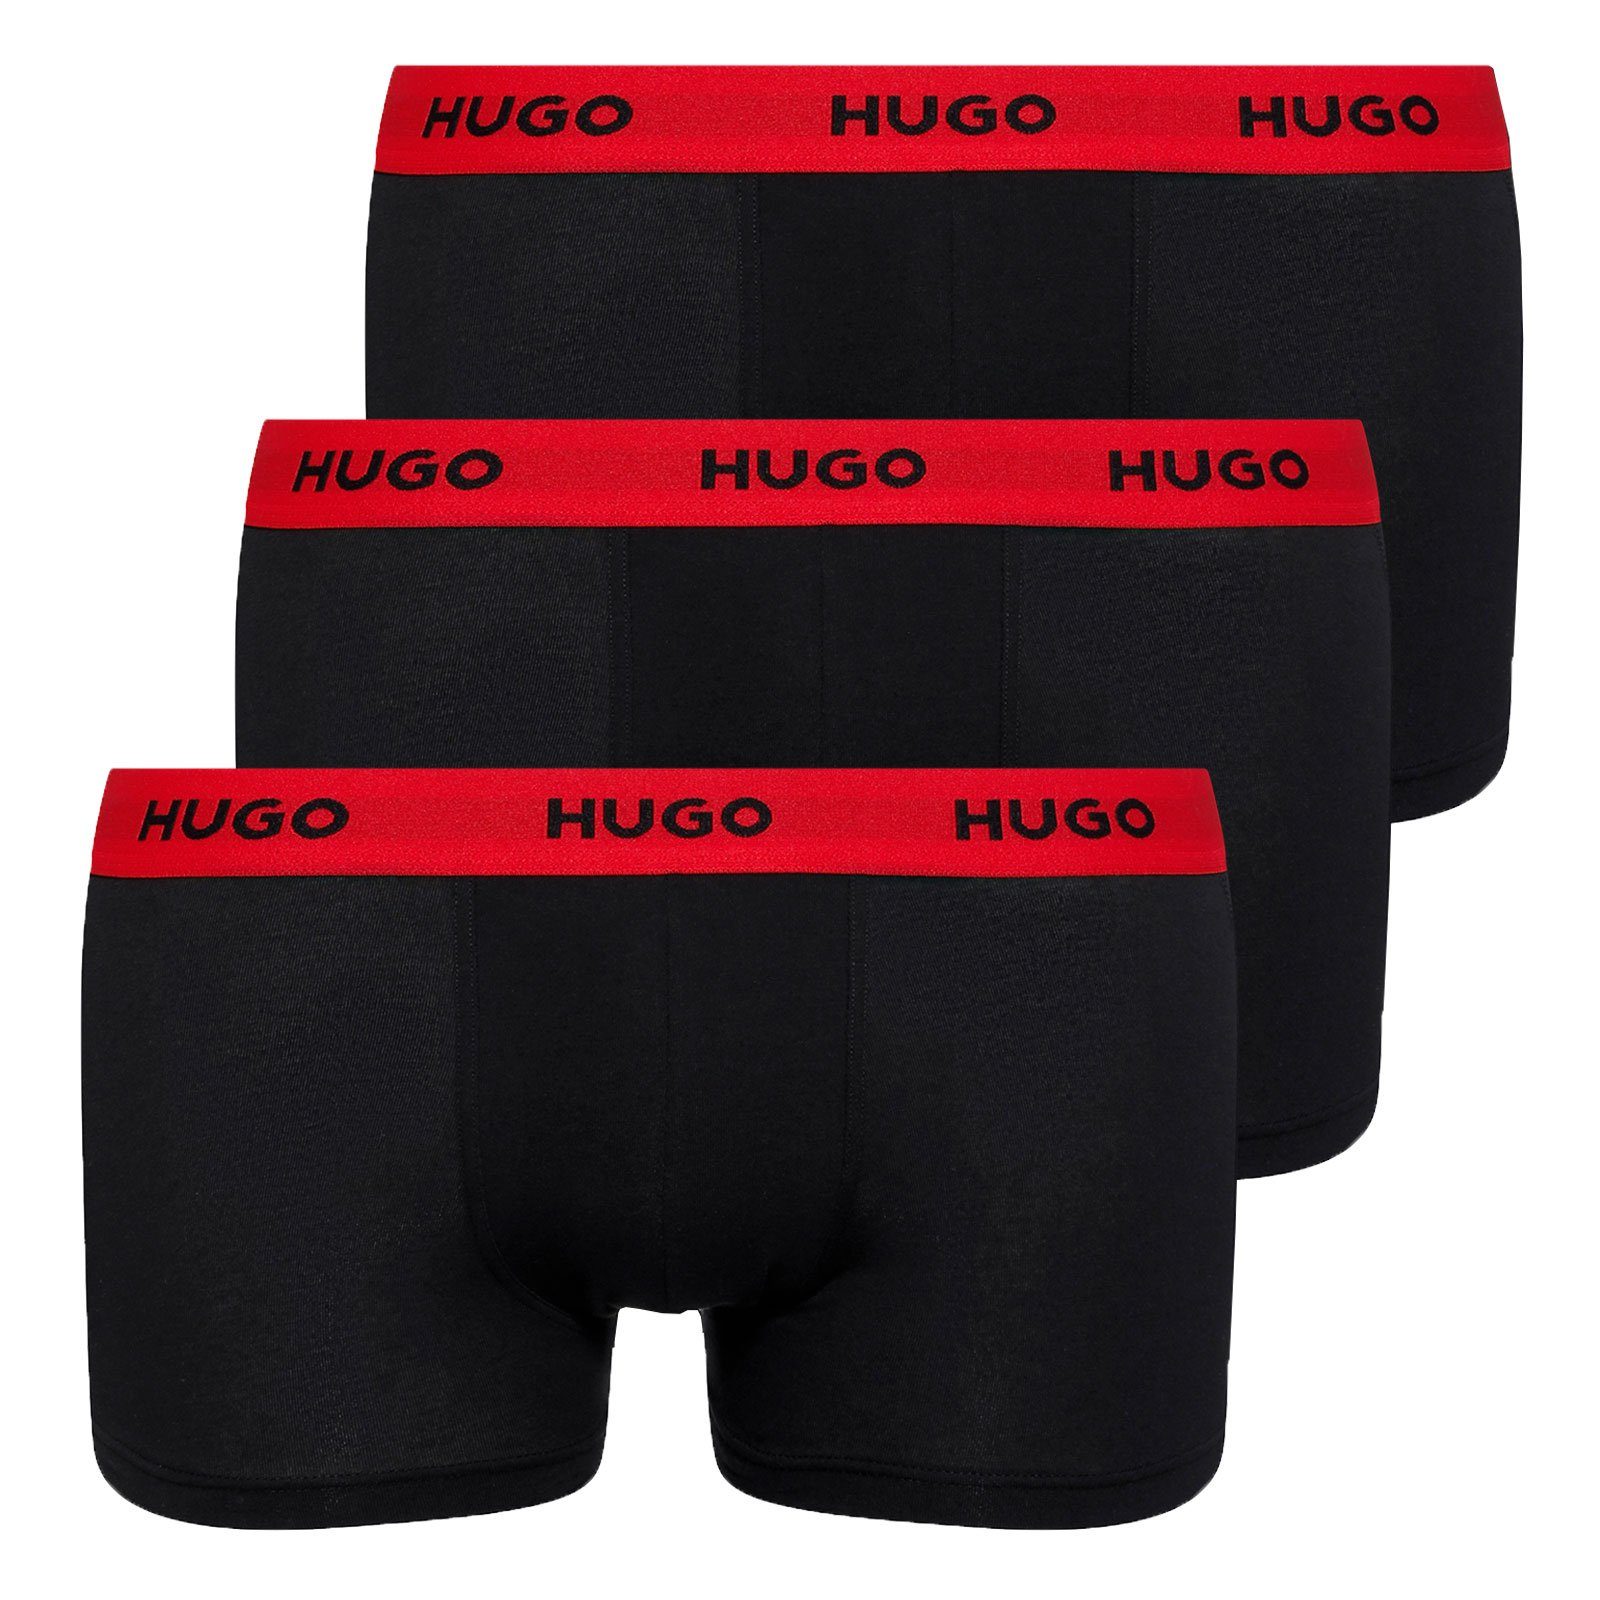 HUGO Trunk Triplet Pack (3-St., 3er Set) mit umlaufendem Markenschriftzug am Bund 002 black / black / black